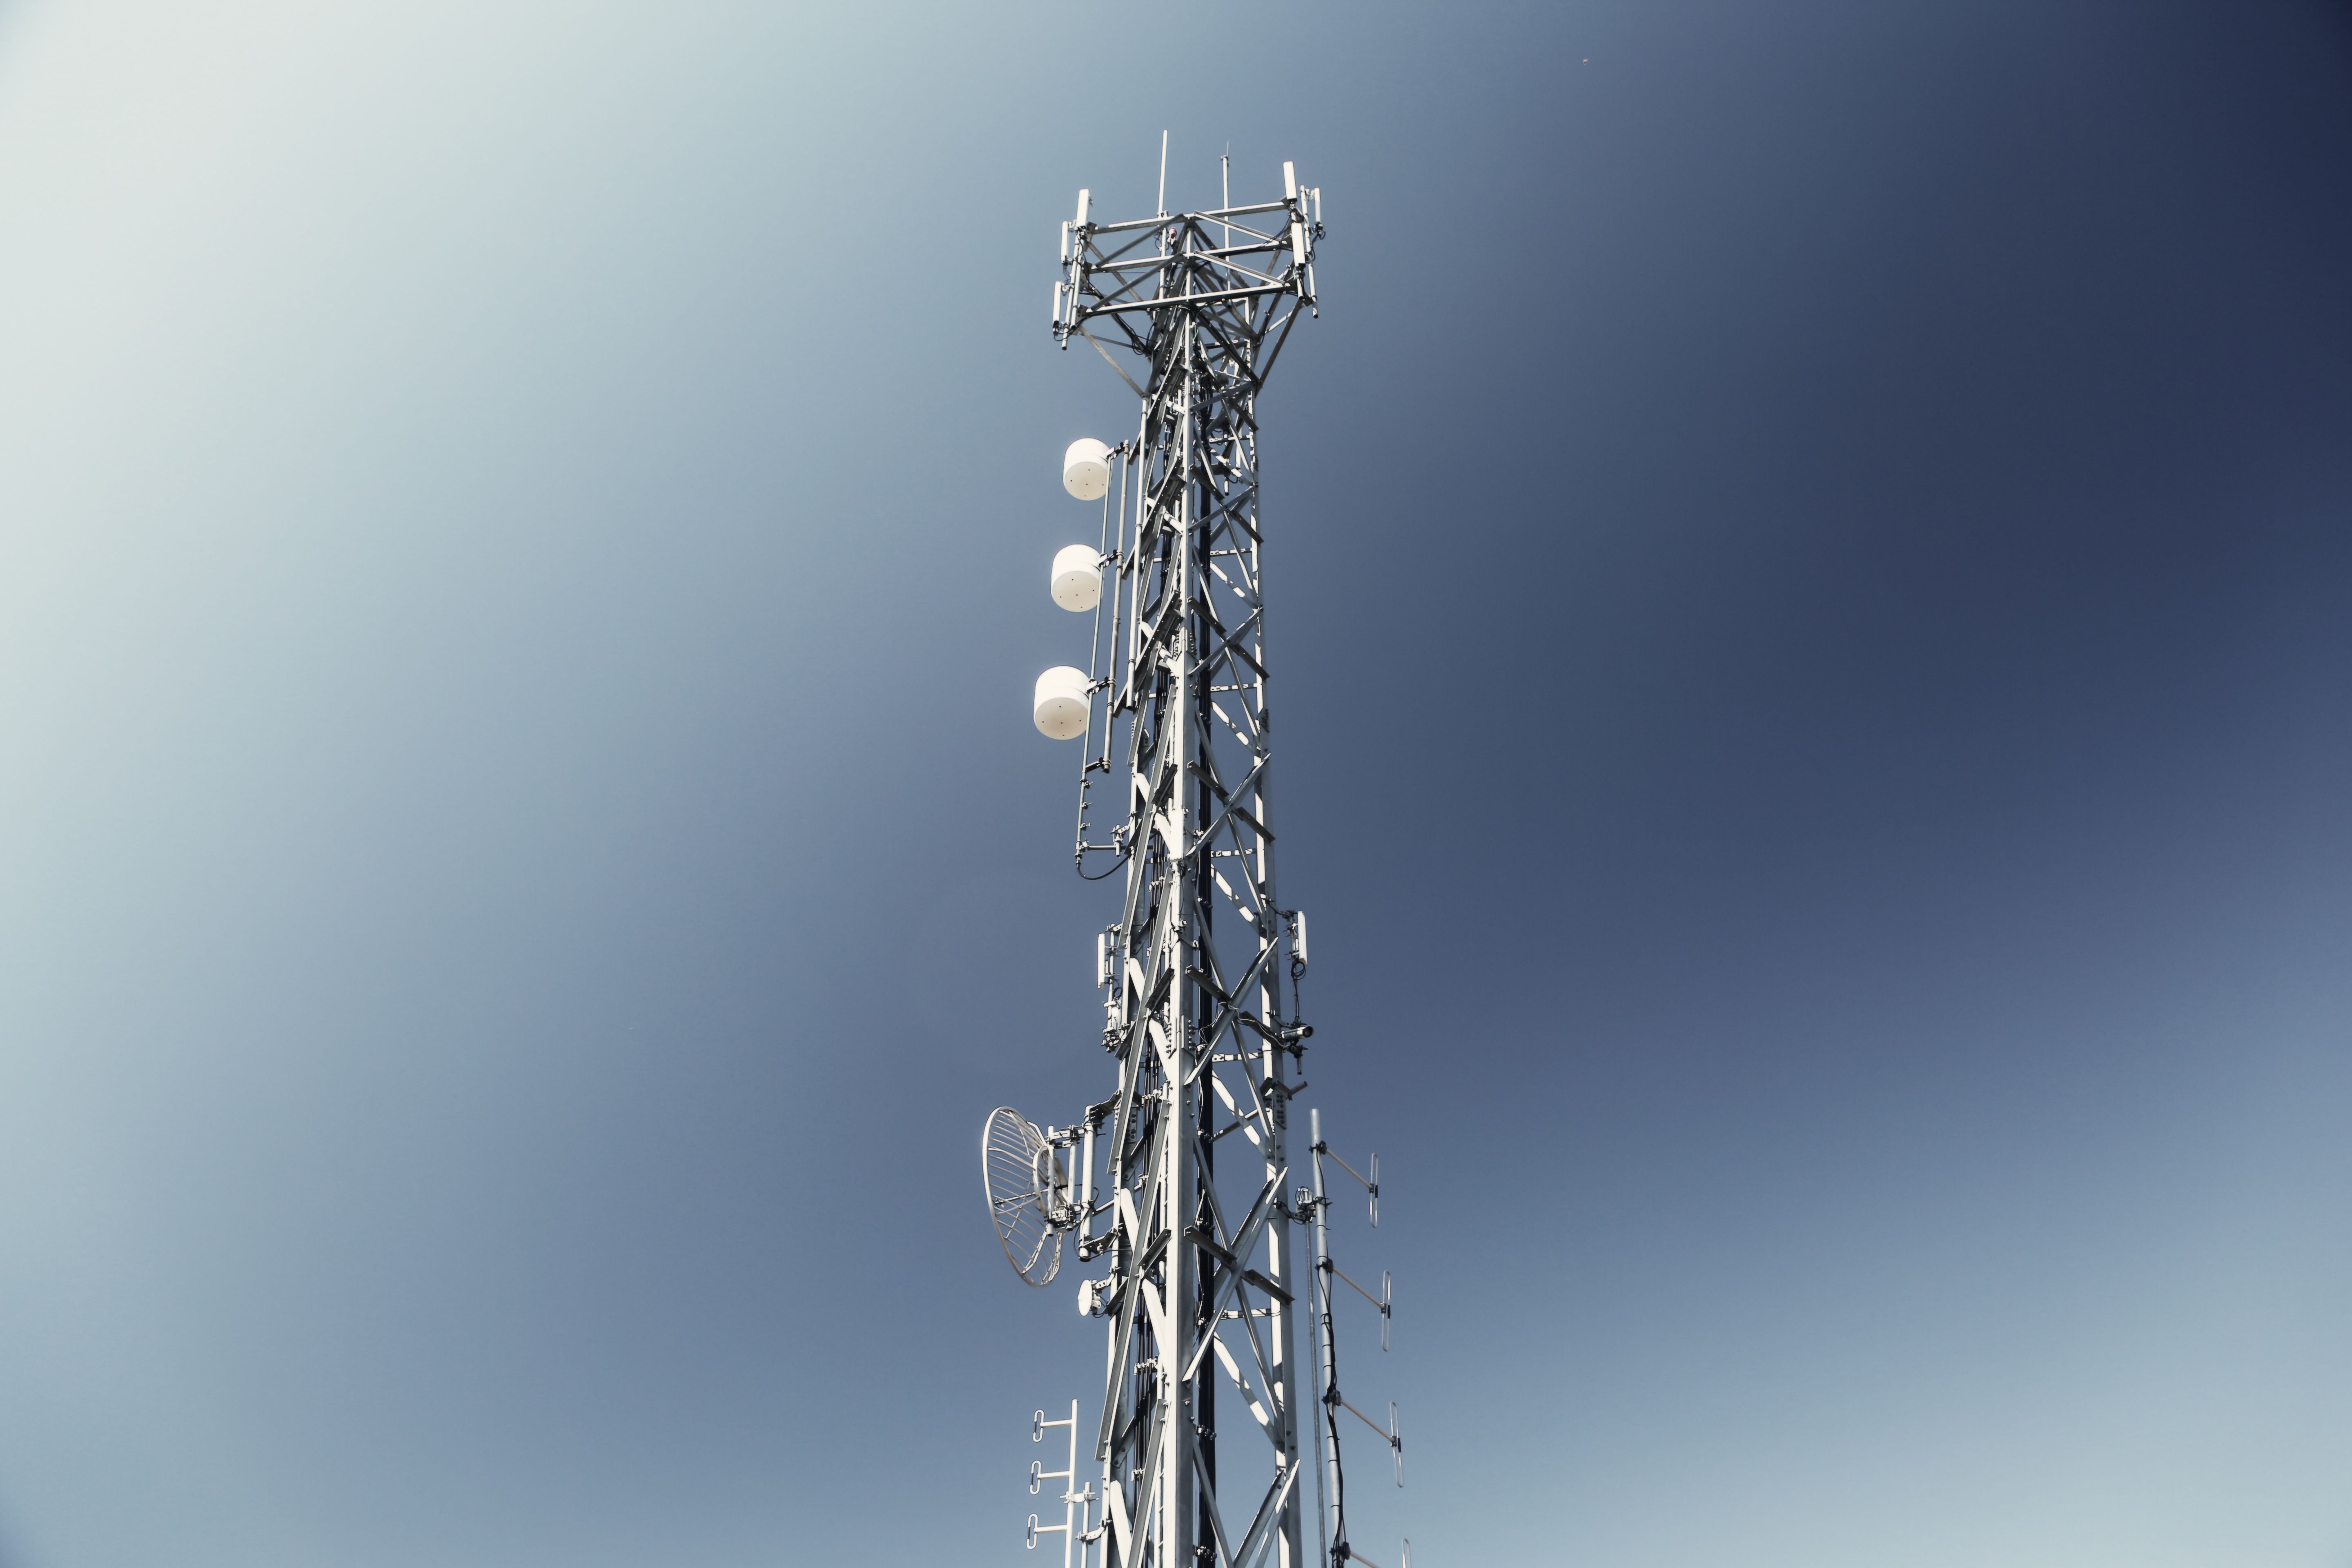 Antenna Communication Image. Free Stock Image Library